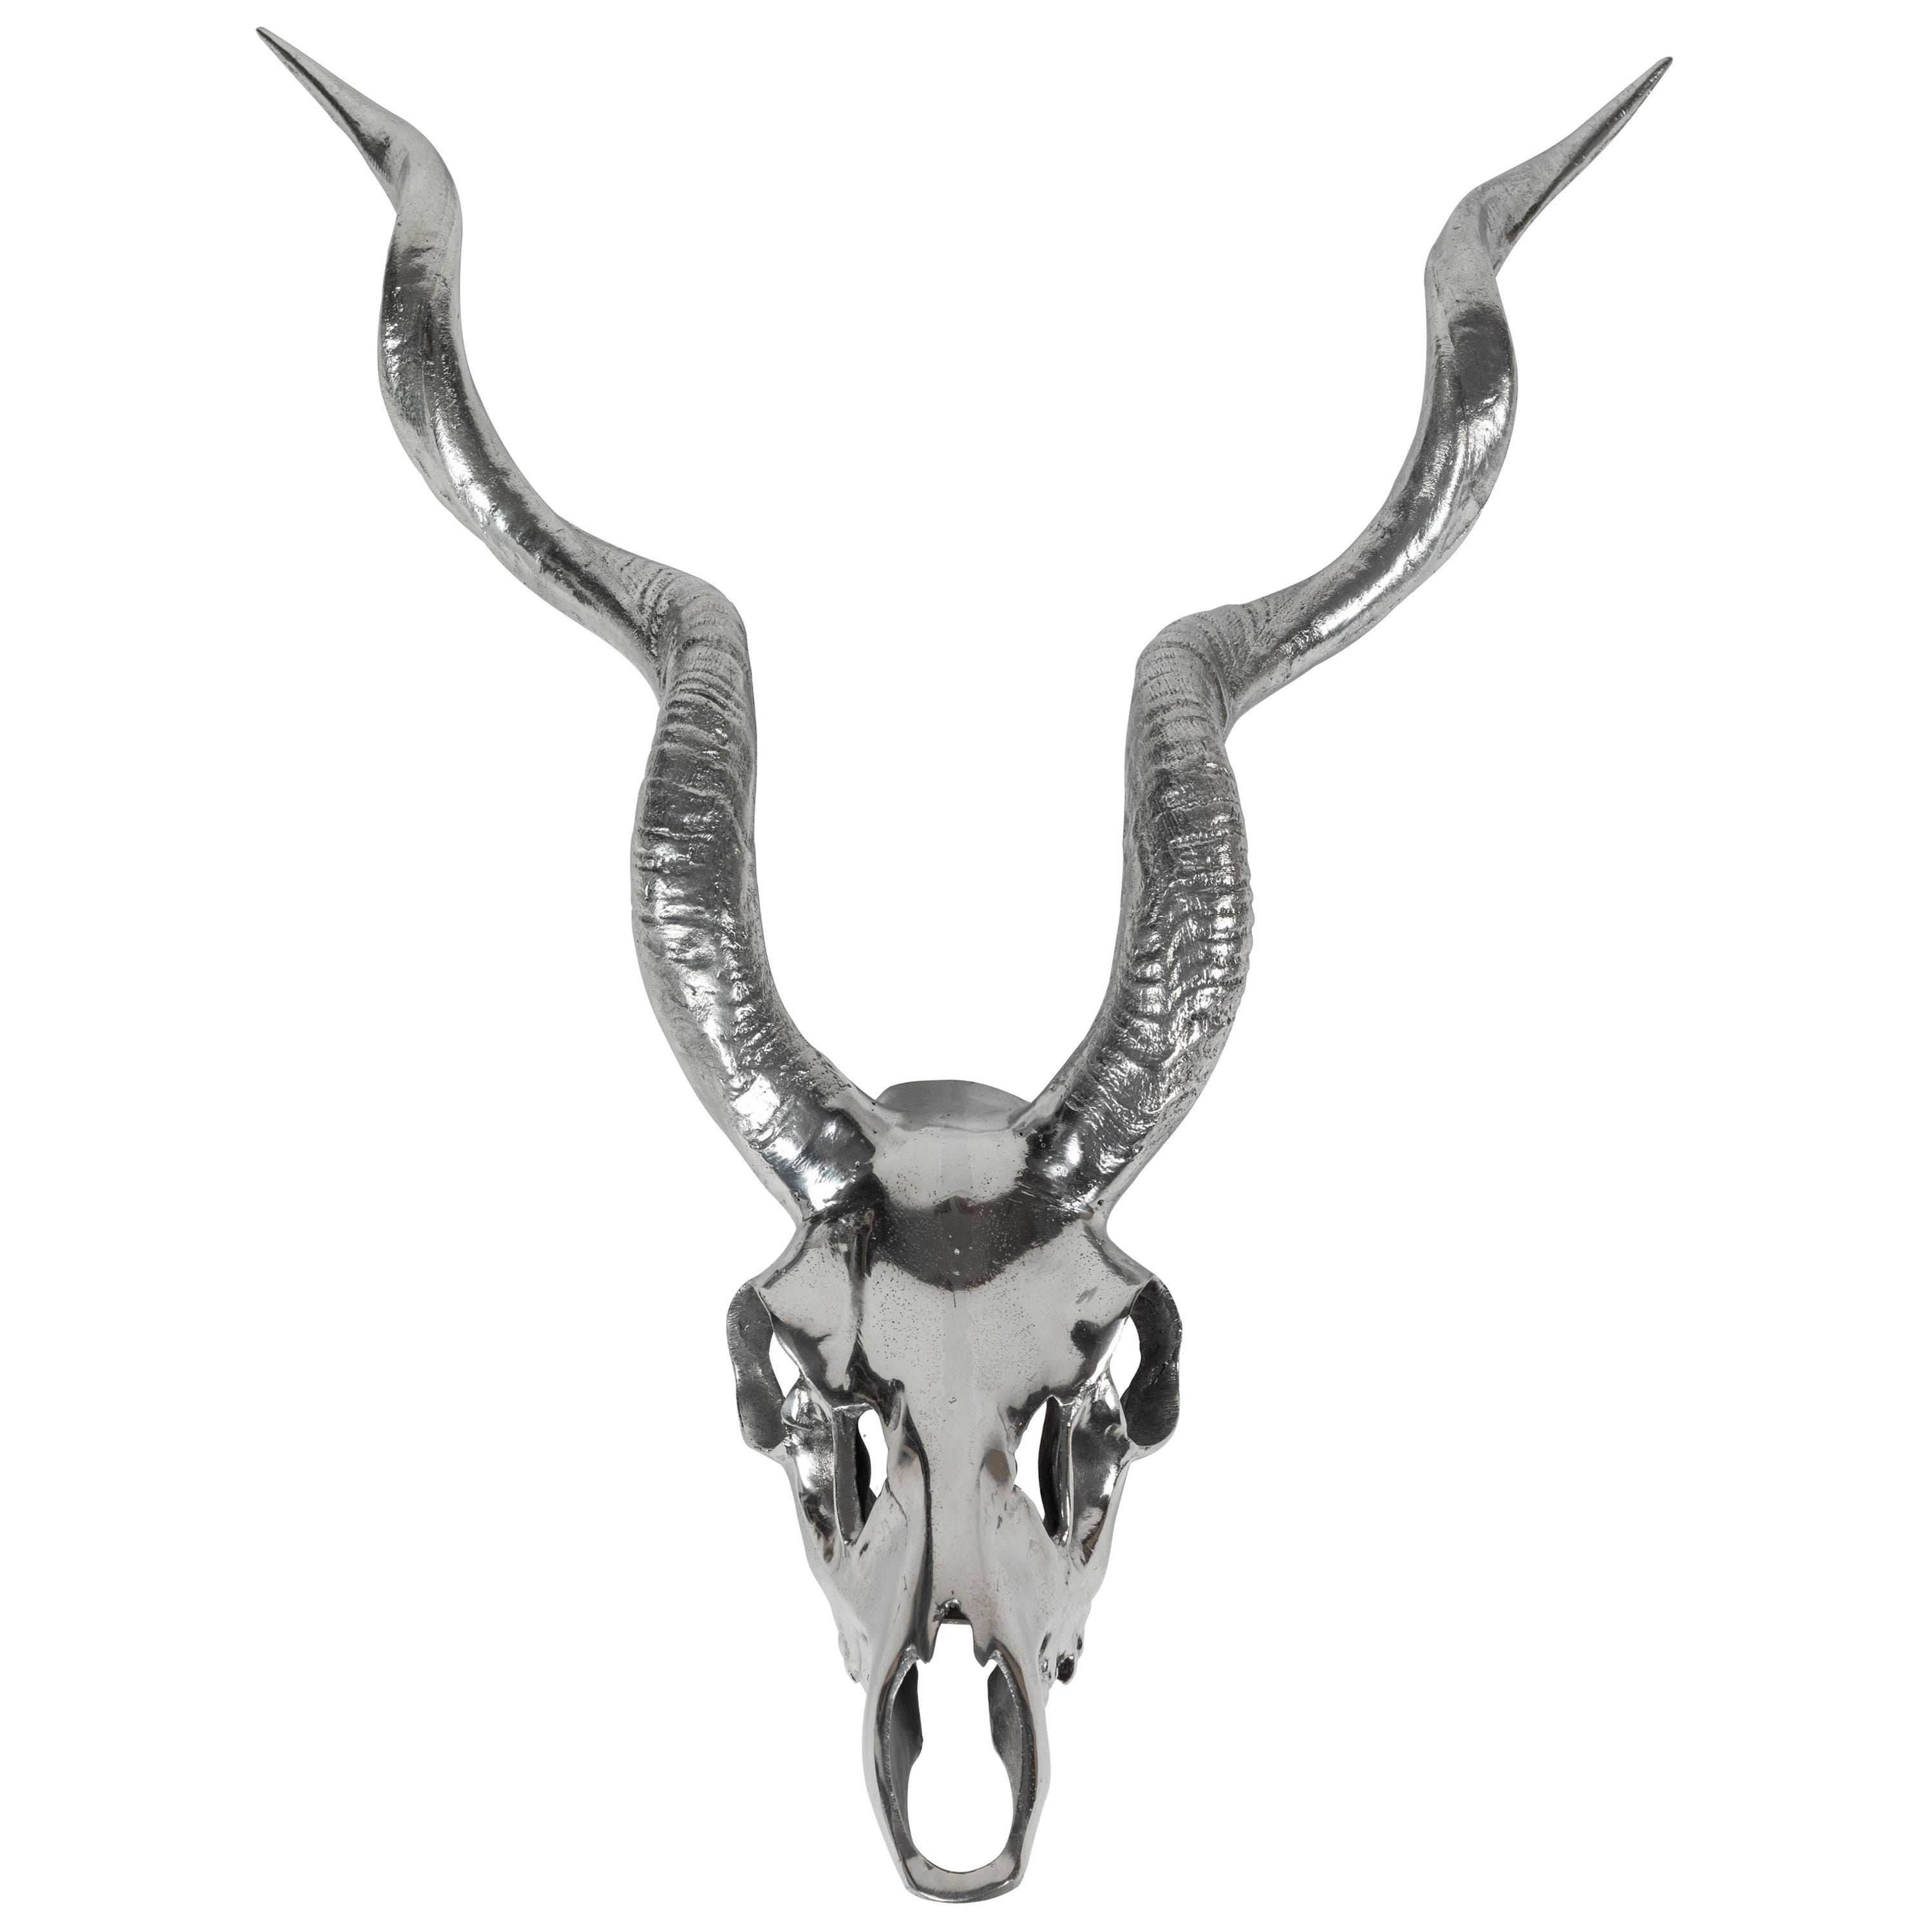 Hanging Sculpture of a Kudu Antelope Skull by Arthur Court